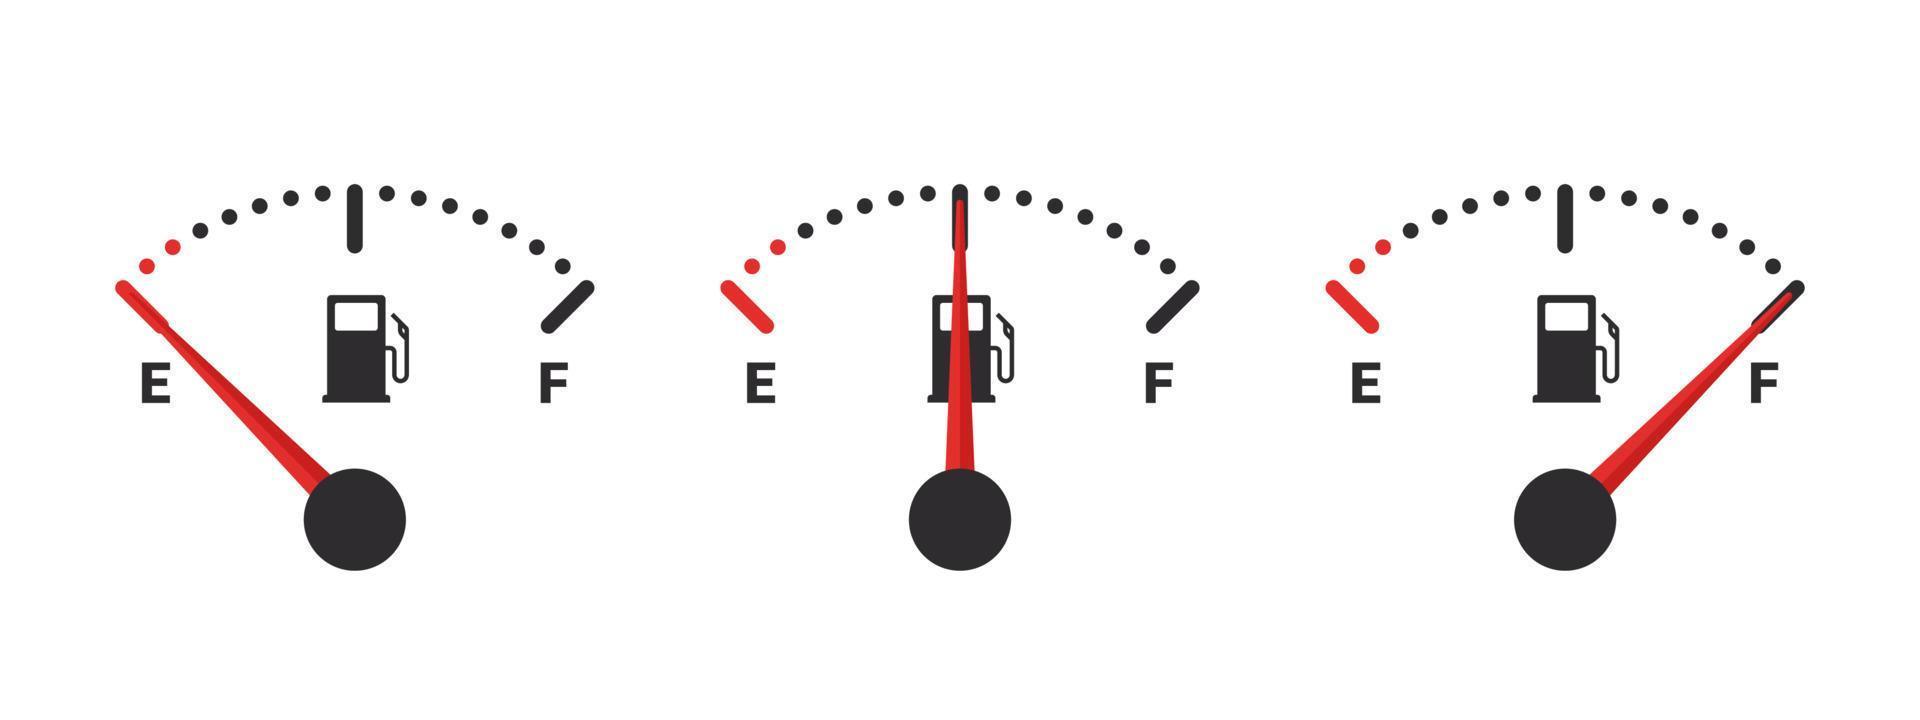 Fuel gauge icons. Gasoline indicator. Fuel indicator concept. Vector illustration